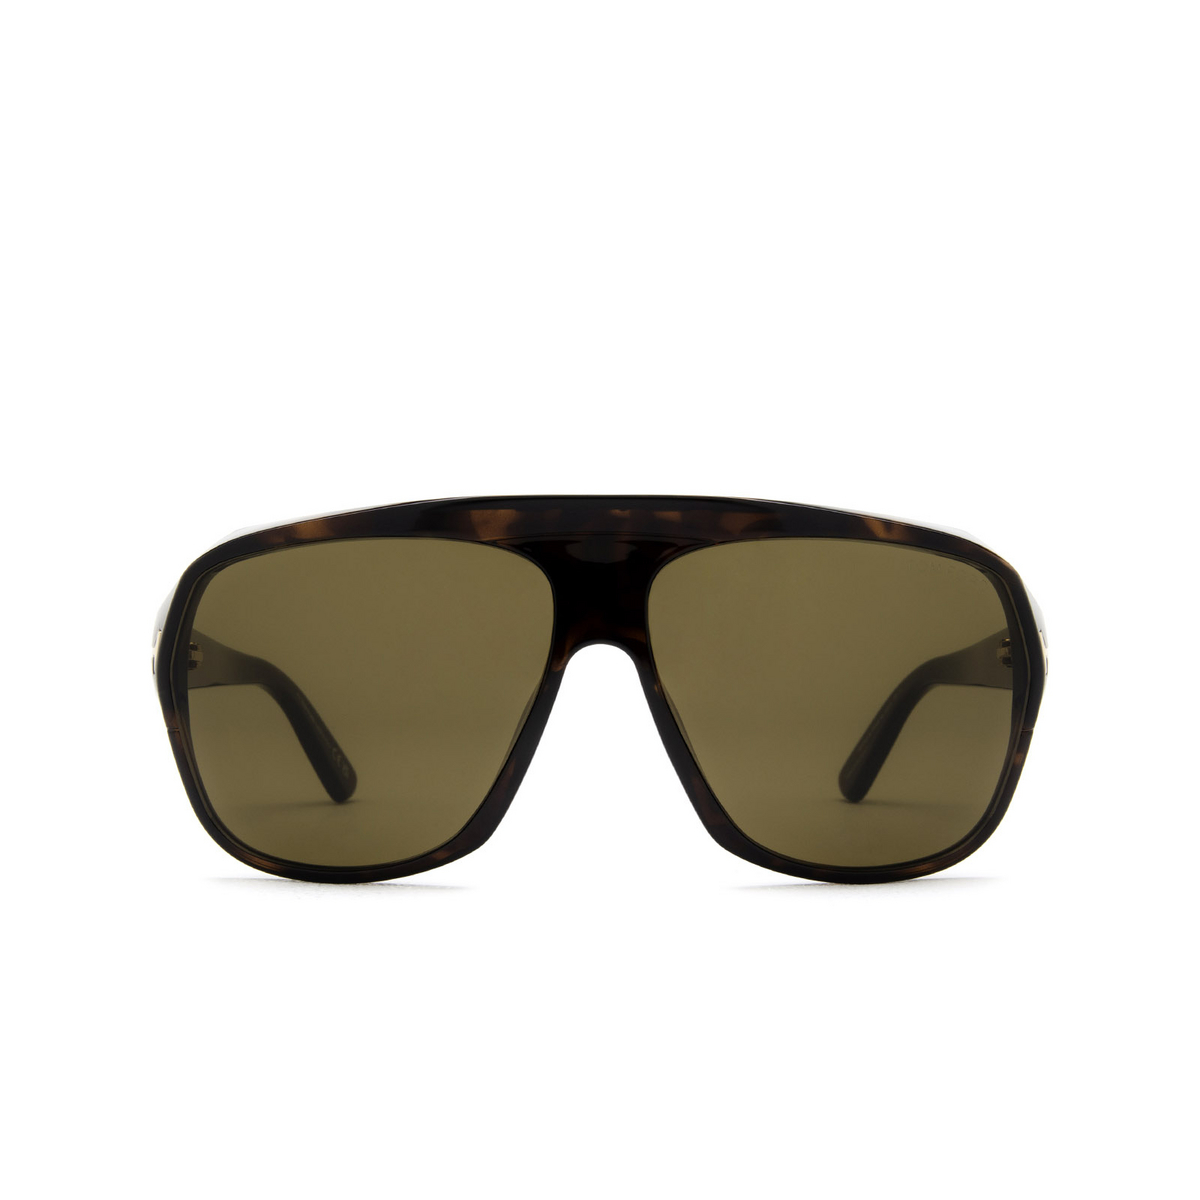 Tom Ford HAWKINGS-02 Sunglasses 52J Dark Havana - front view